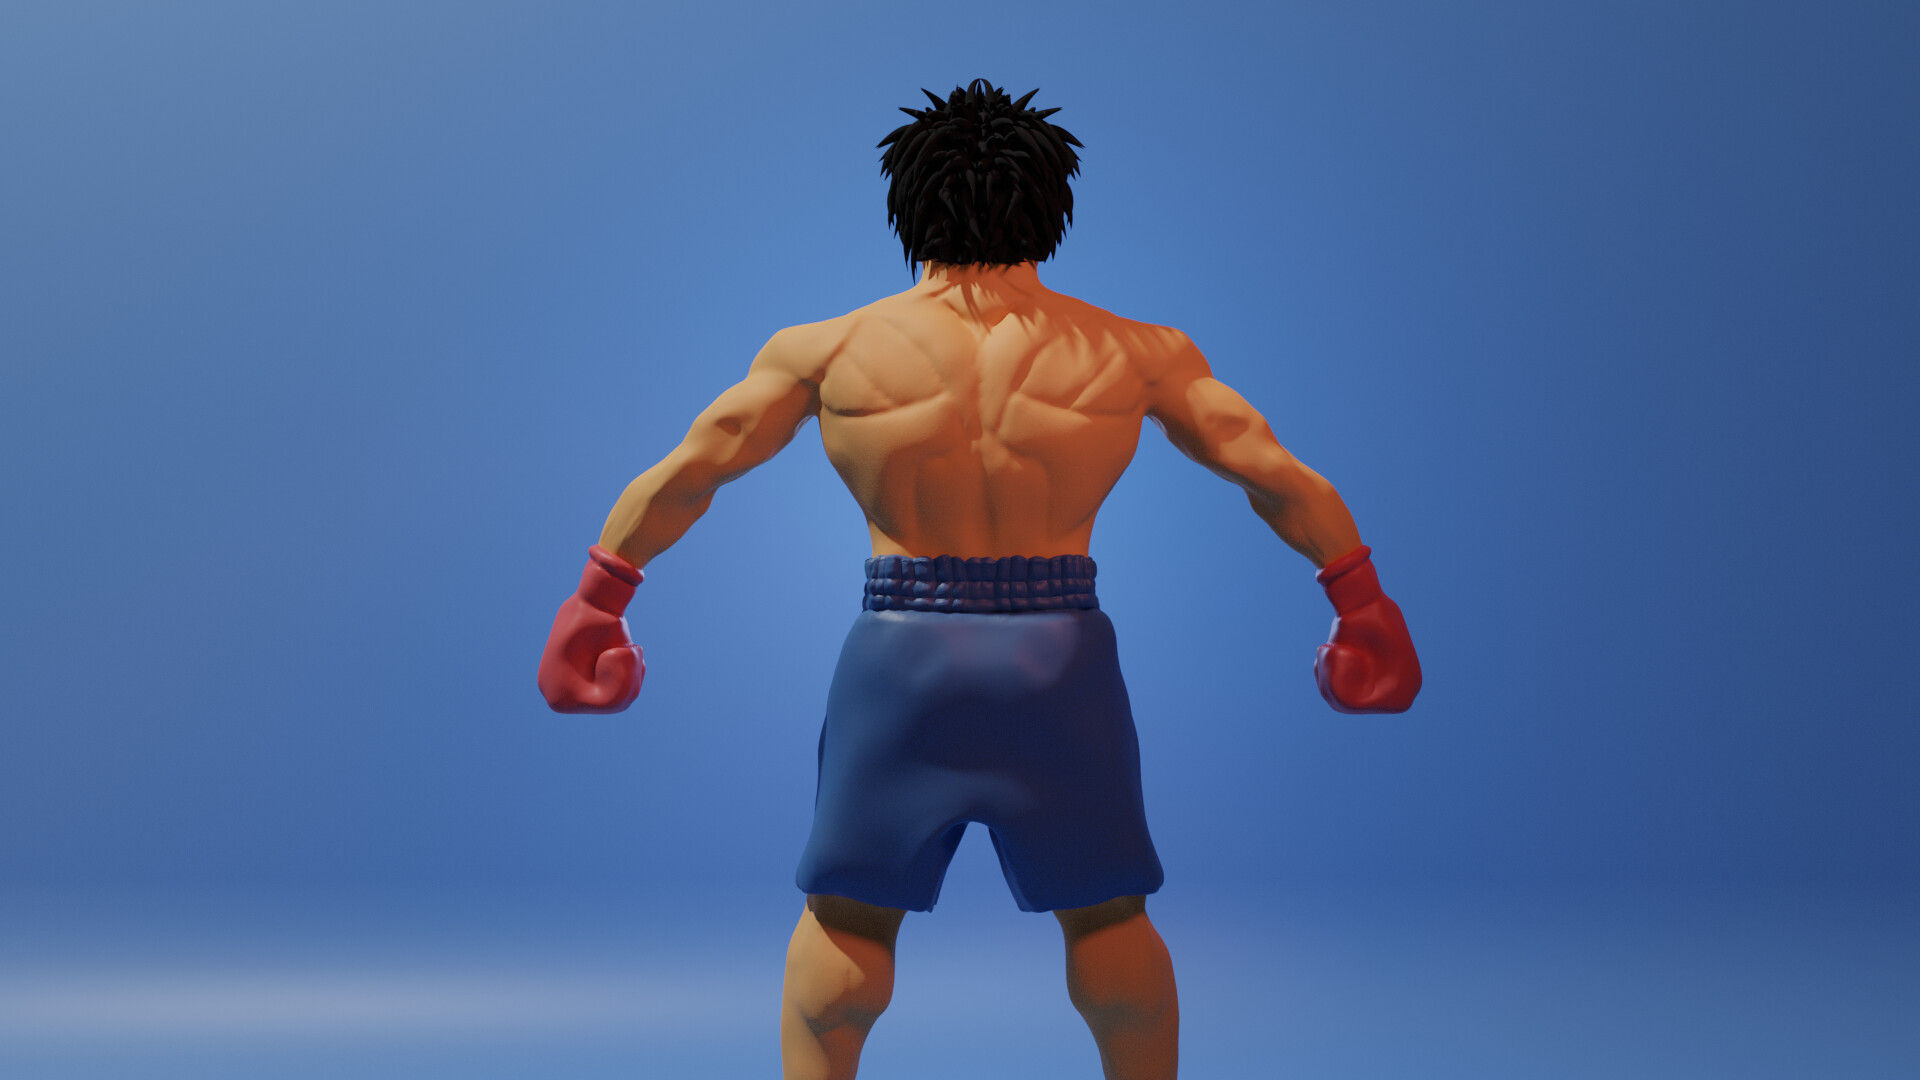 Hajime no Ippo figure 3D model 3D printable